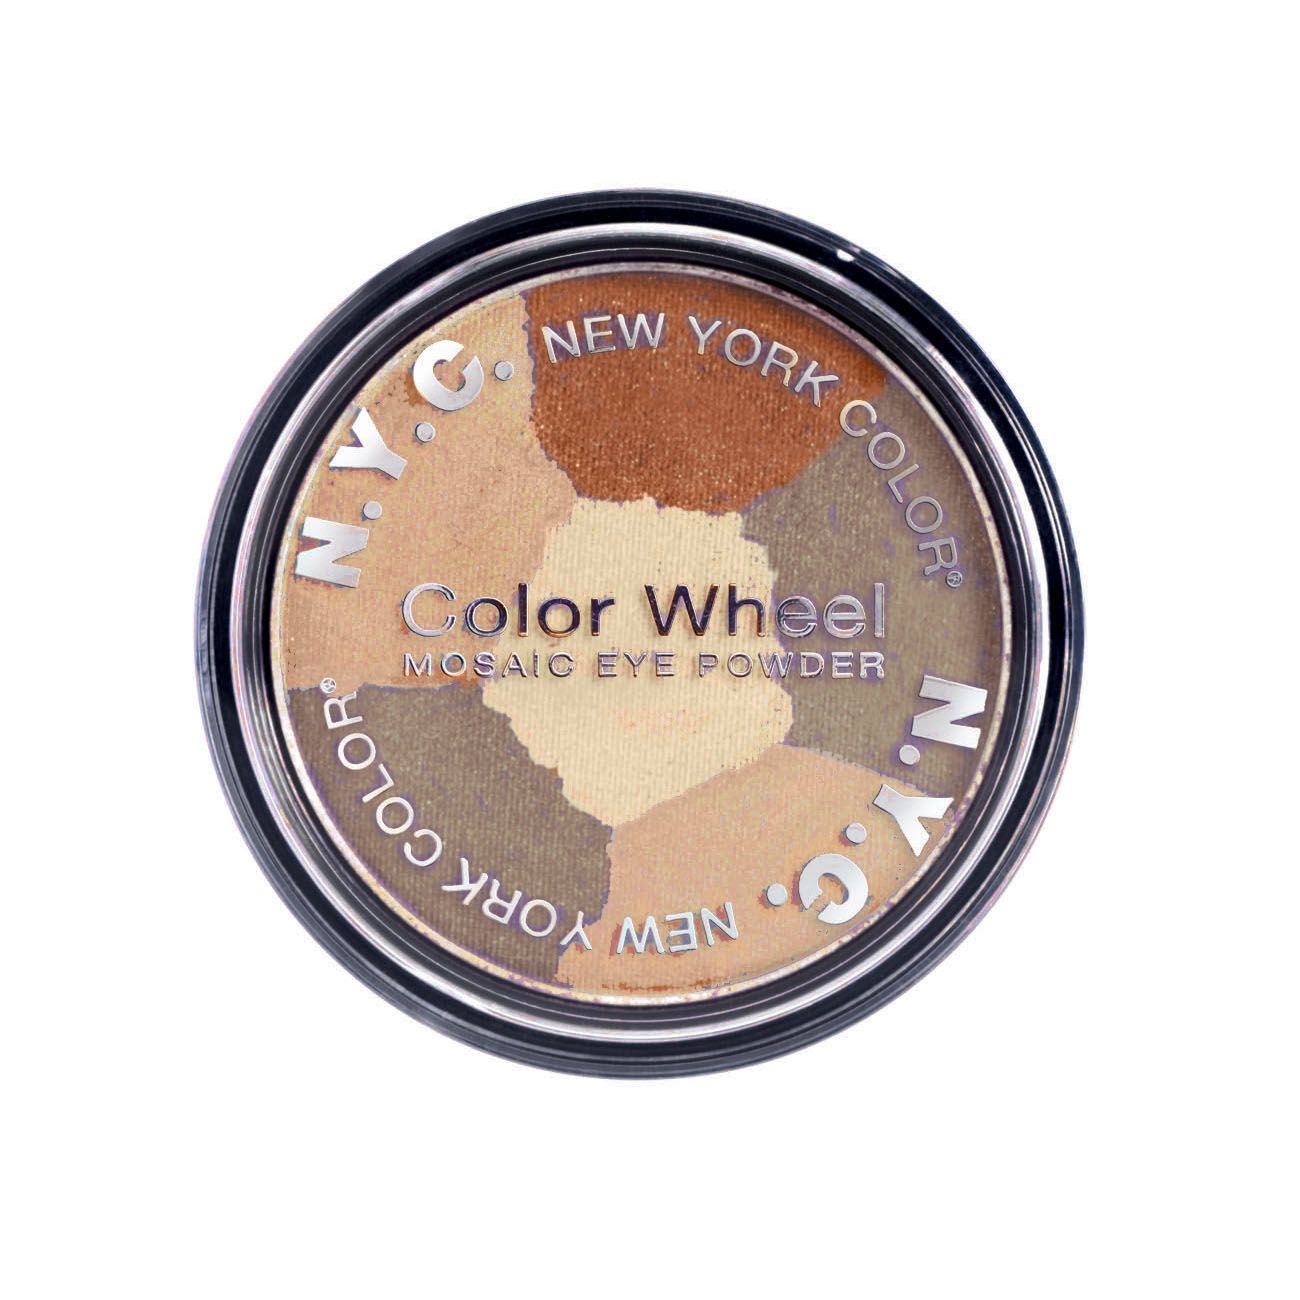 Color Wheel Mosaic Eye Powder